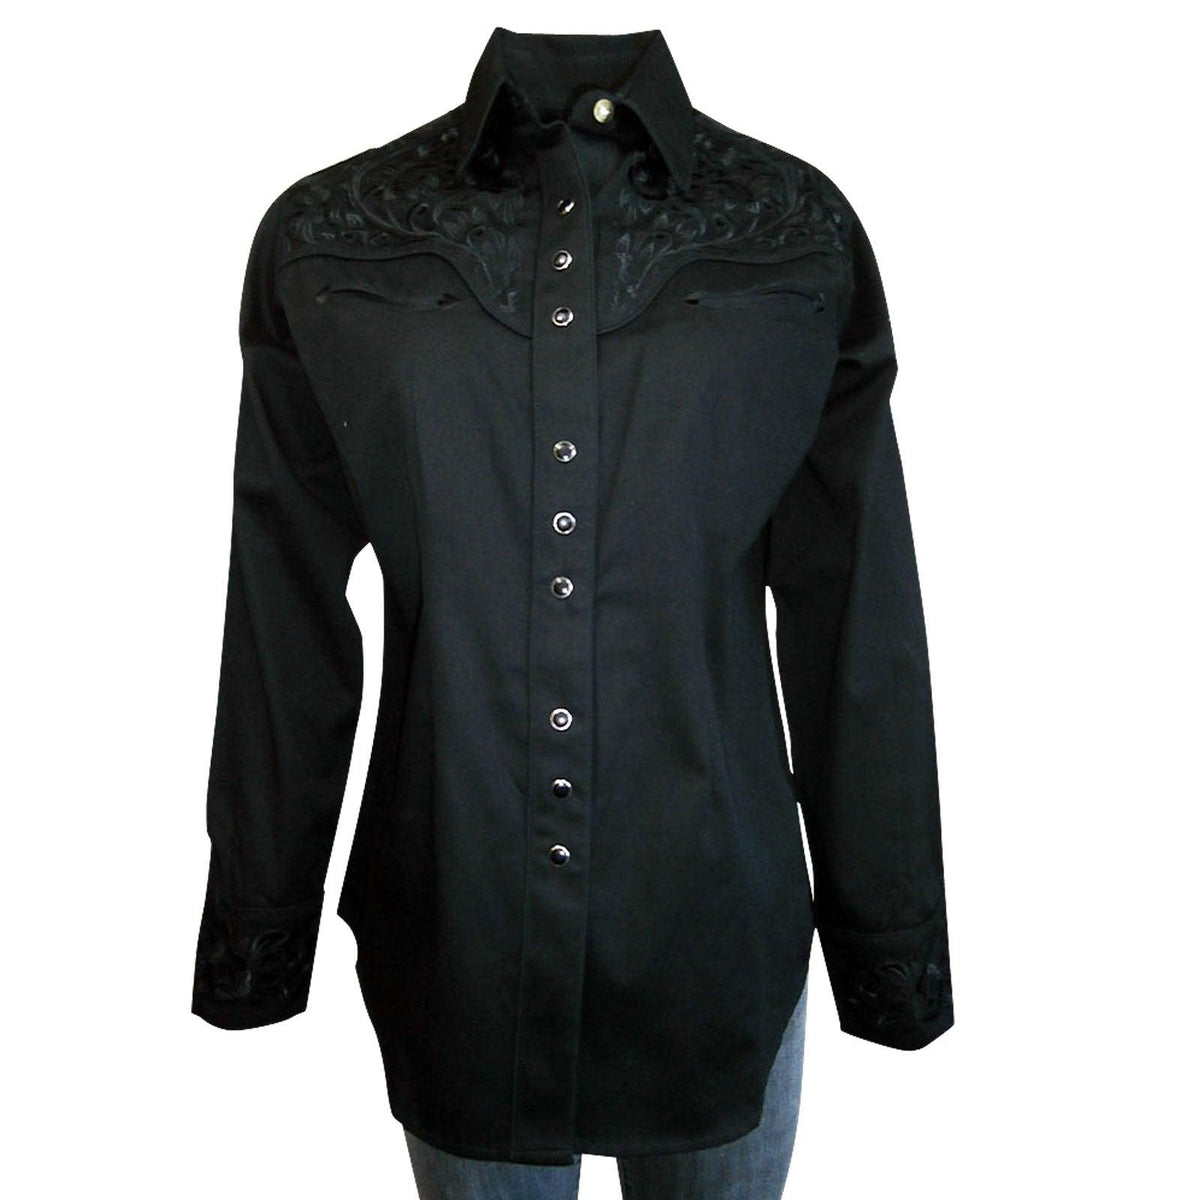 Women's Vintage Tooling Embroidery Black-on-Black Western Shirt - Flyclothing LLC